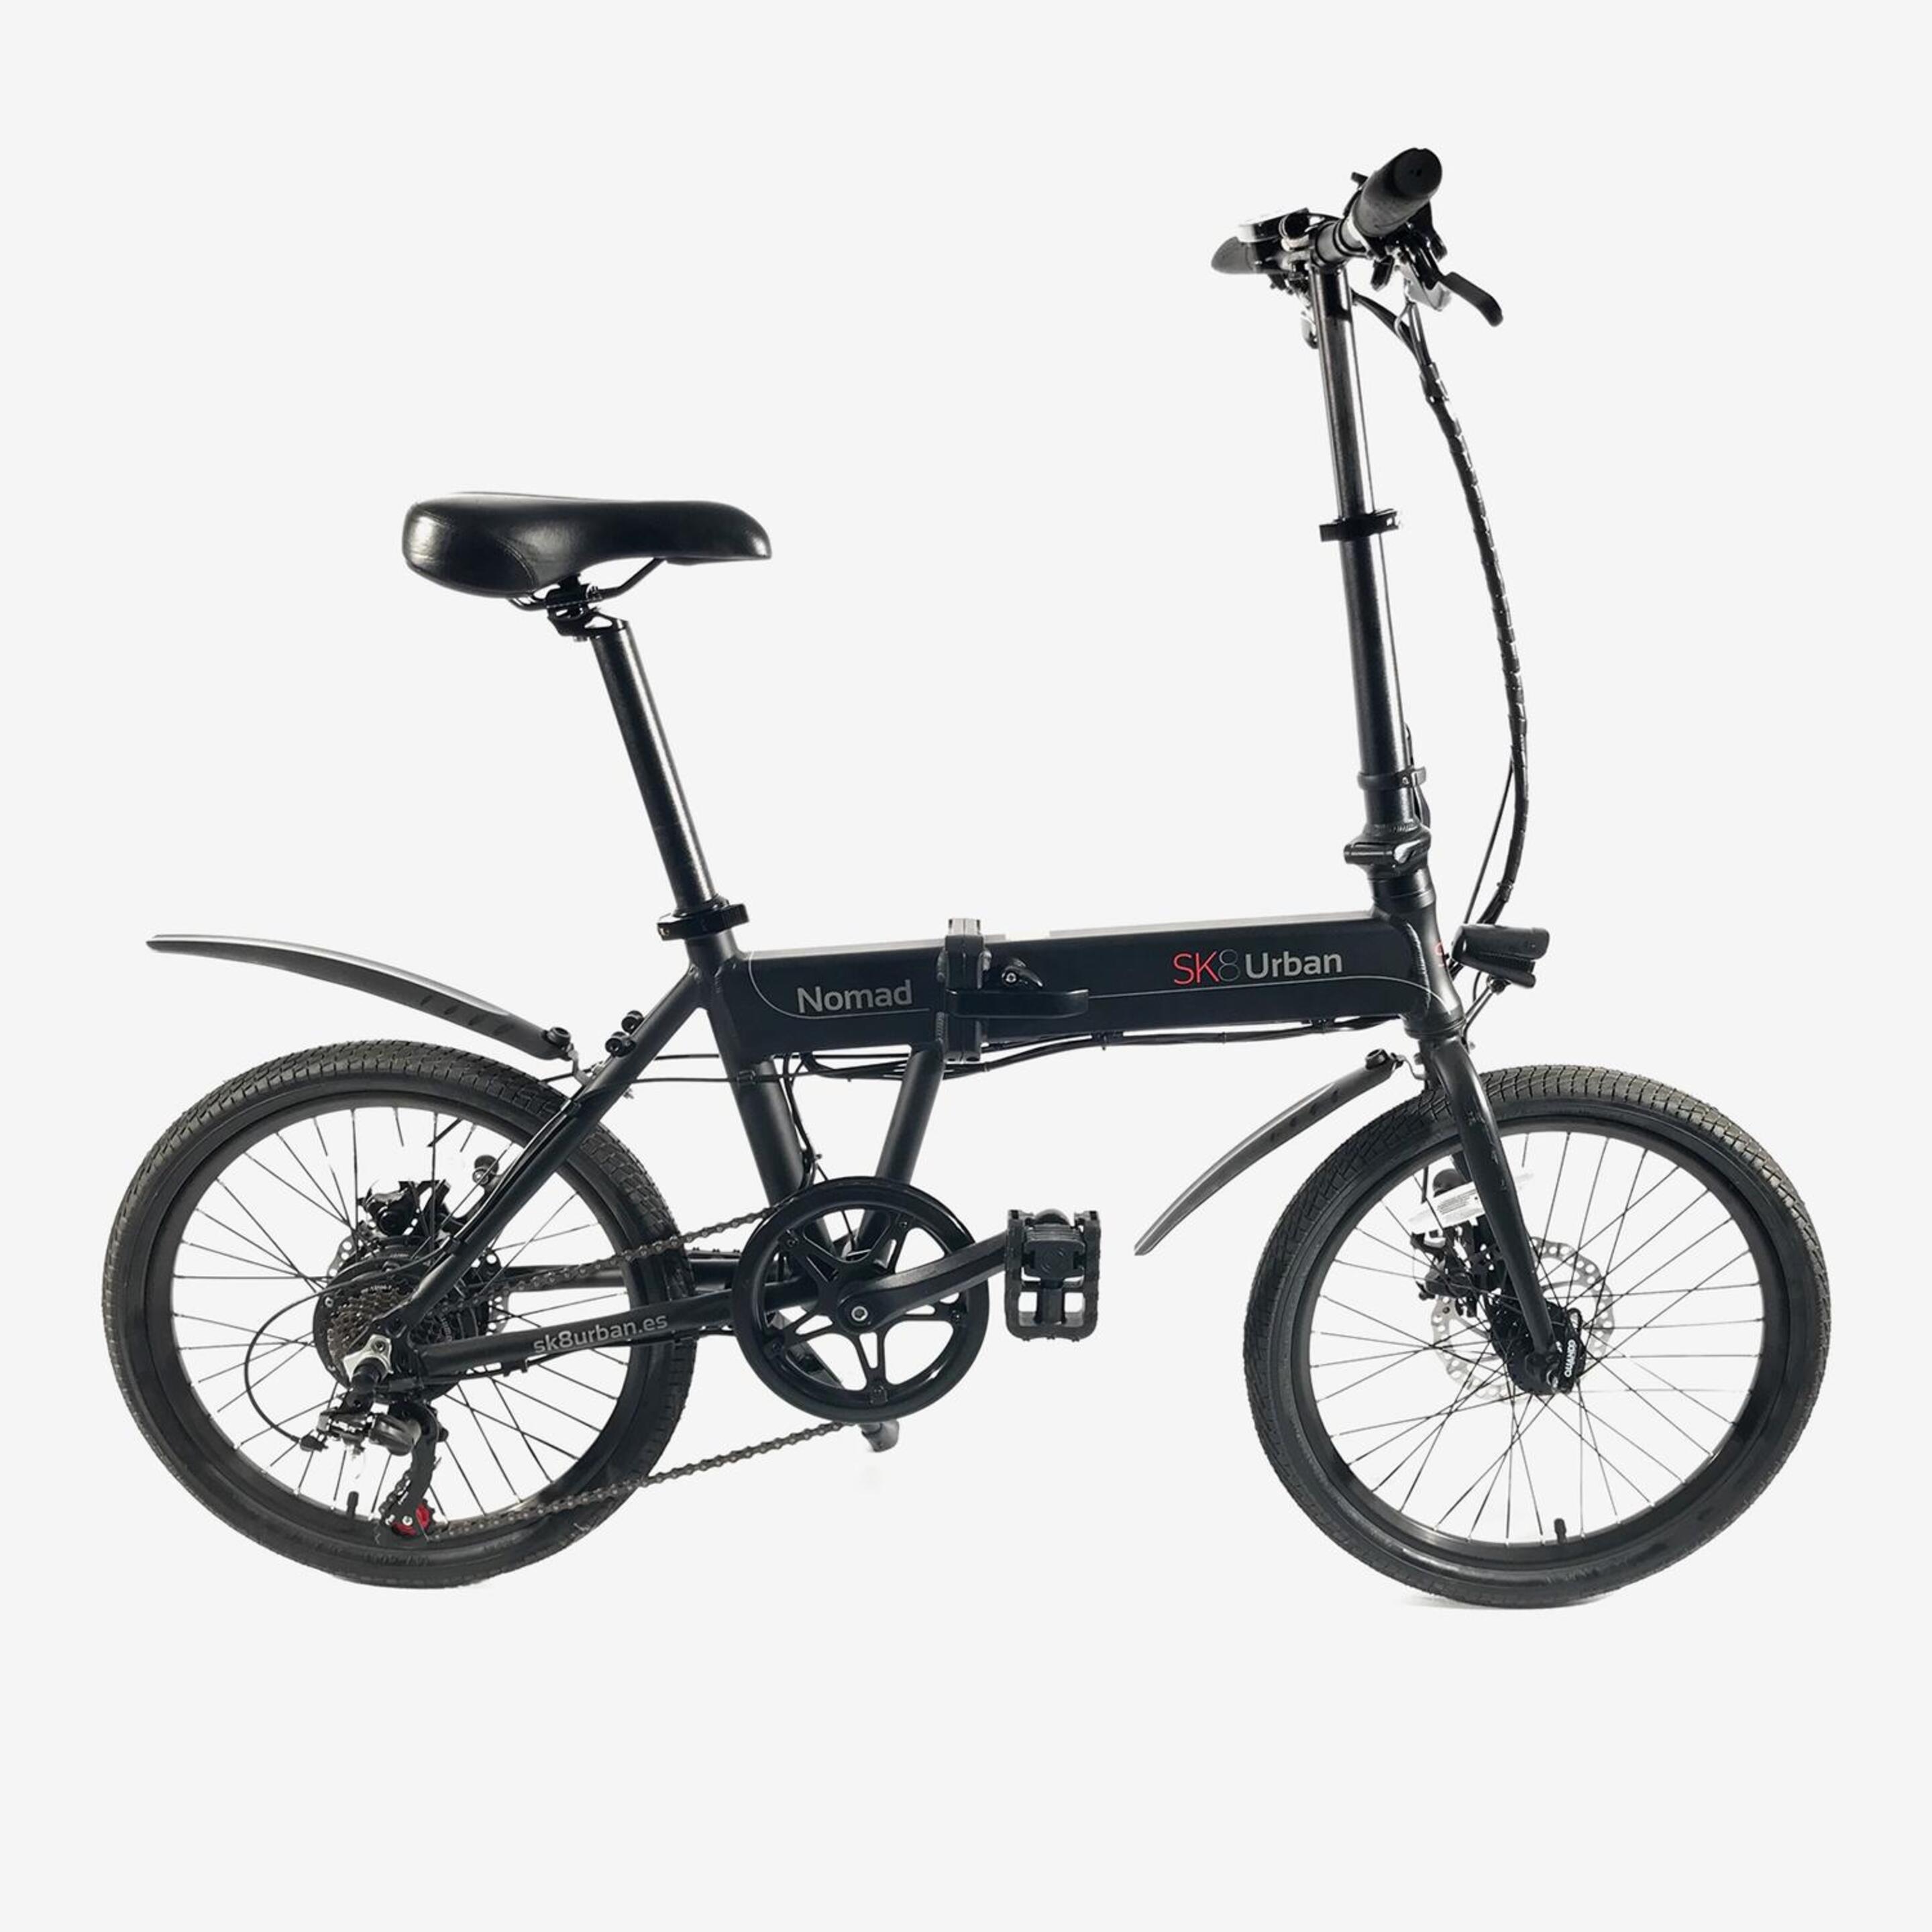 Sk8 Urban Nomad - negro - Bicicleta Eléctrica